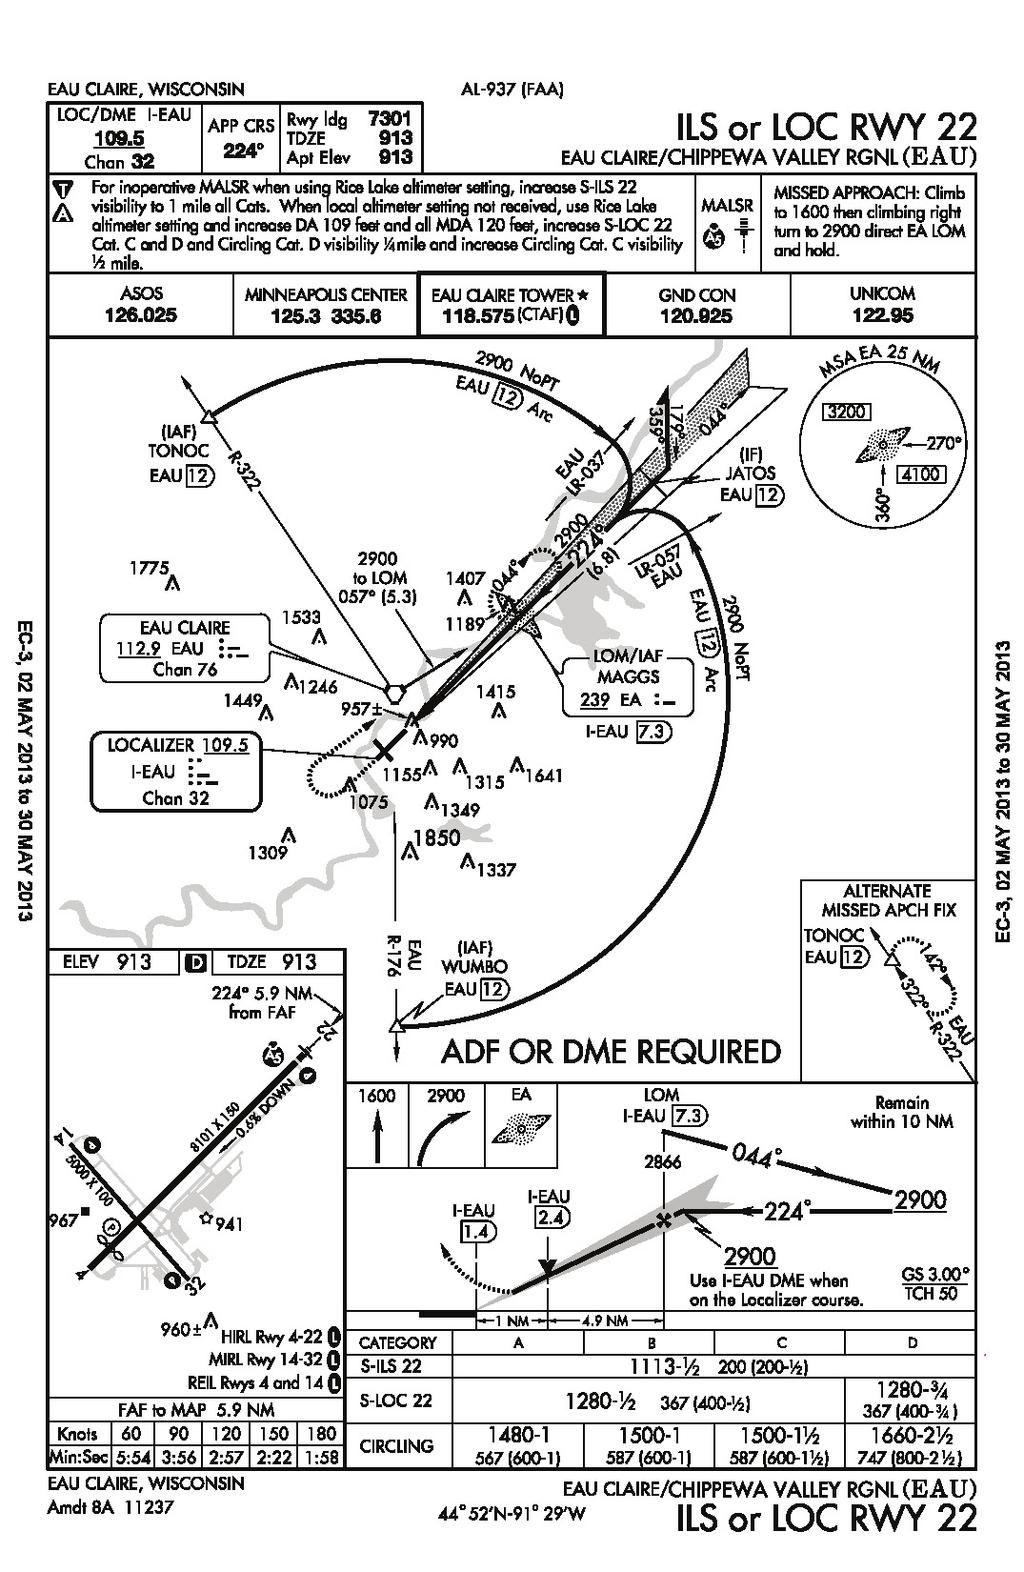 Source Information: on: FAA Aeronautical al Navigation atio ion Products Figure 1-13 ILS or LOC Rwy 22